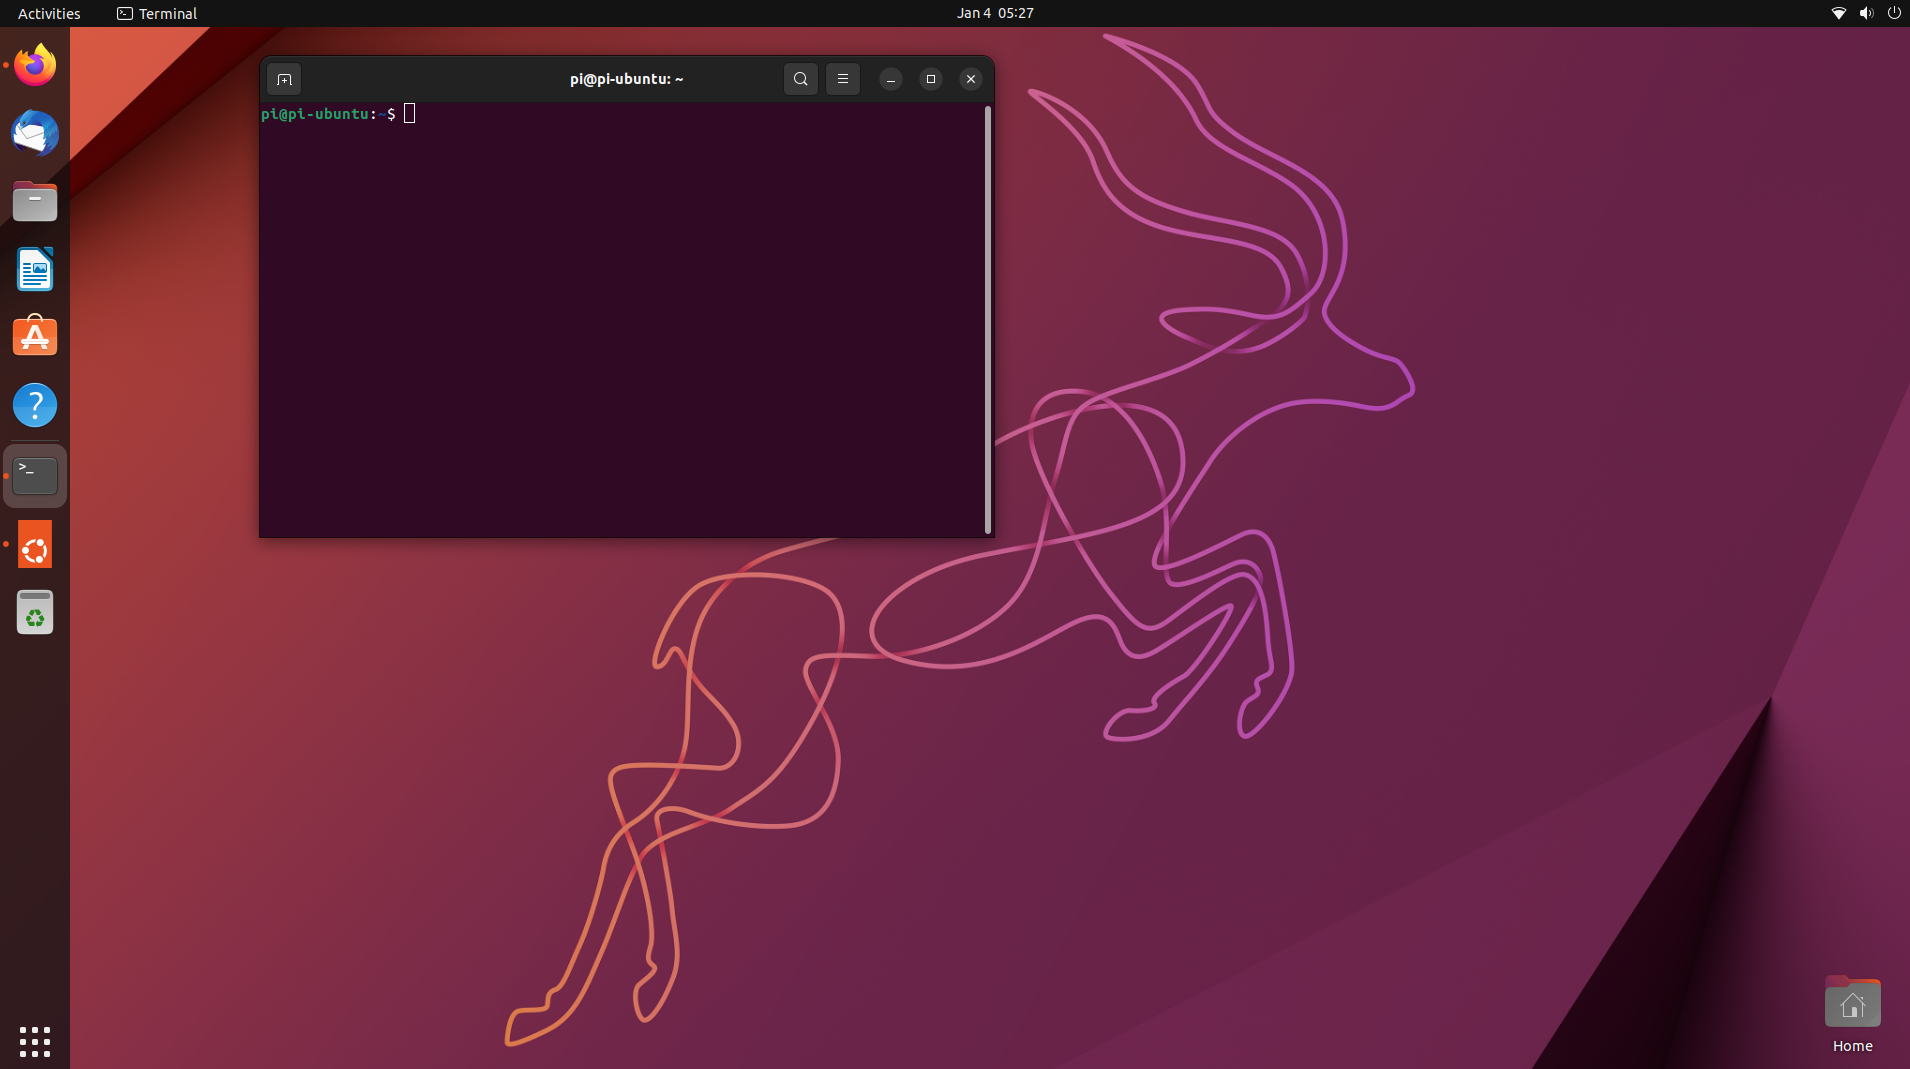 Viewing the newly-installed Ubuntu desktop